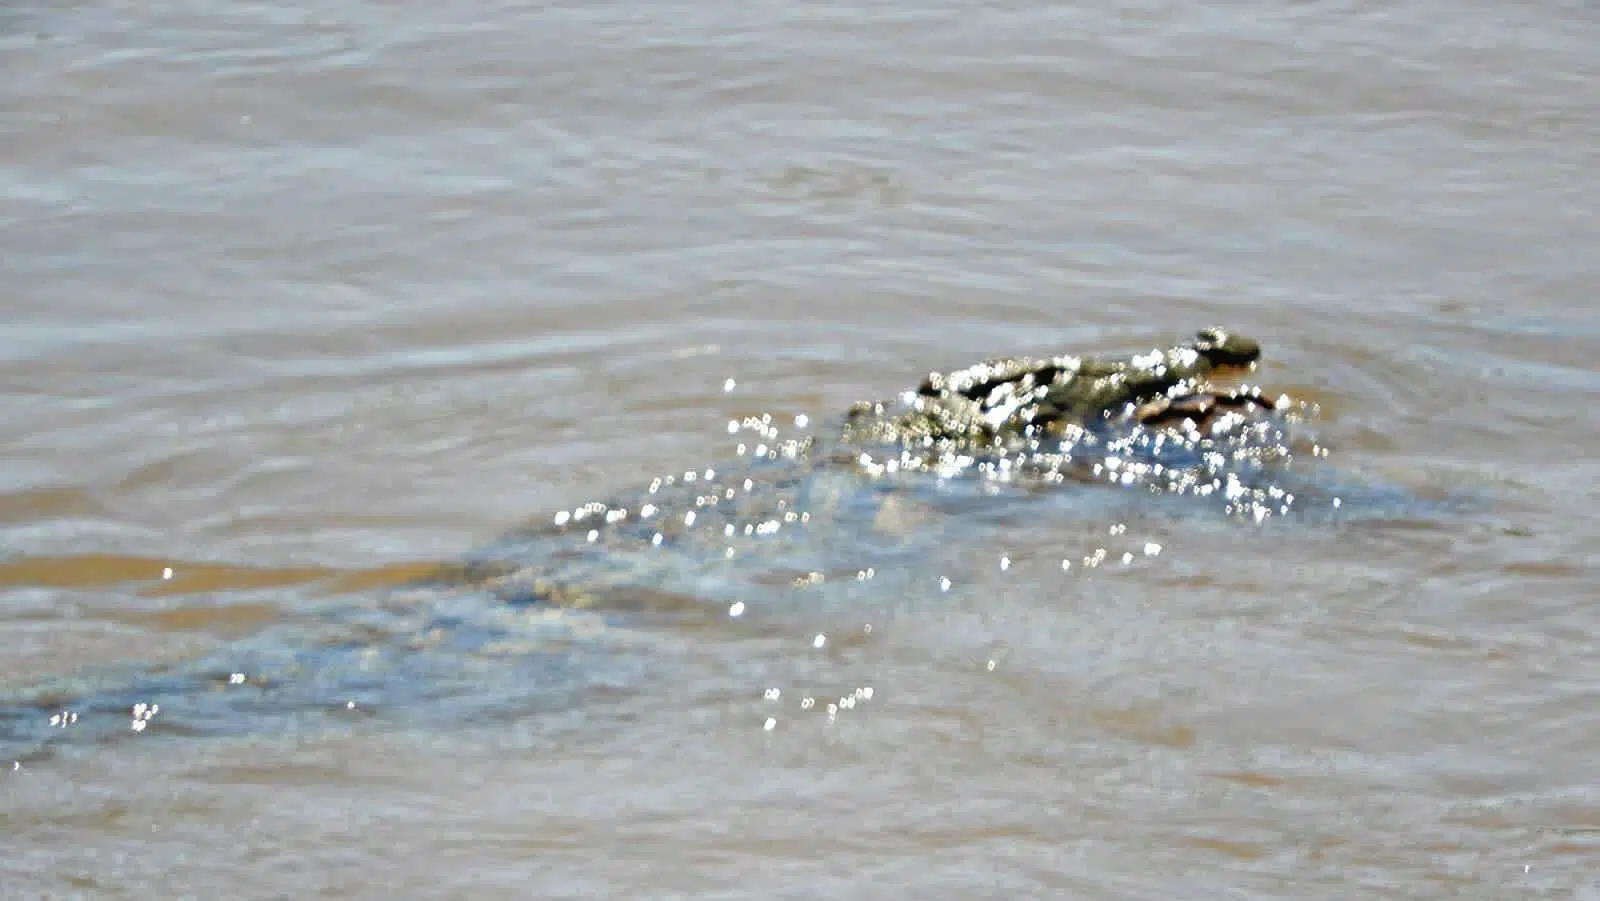 Crocodile swimming off with pangolin